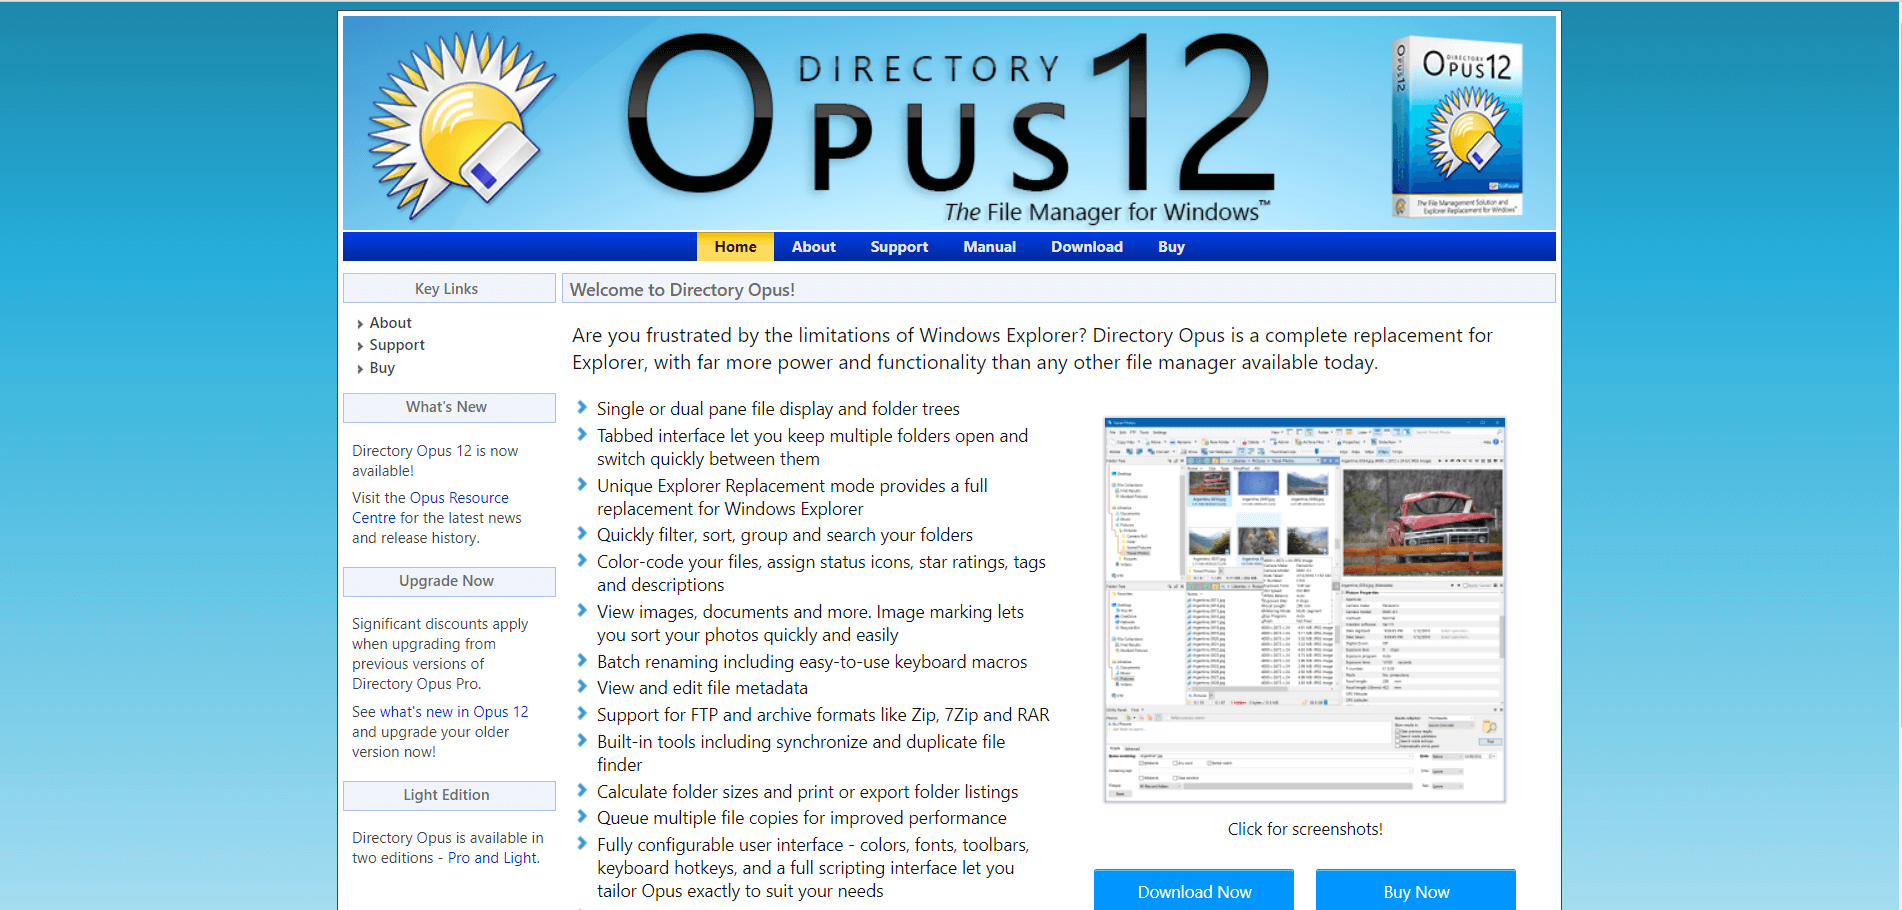 Directory Opus 12